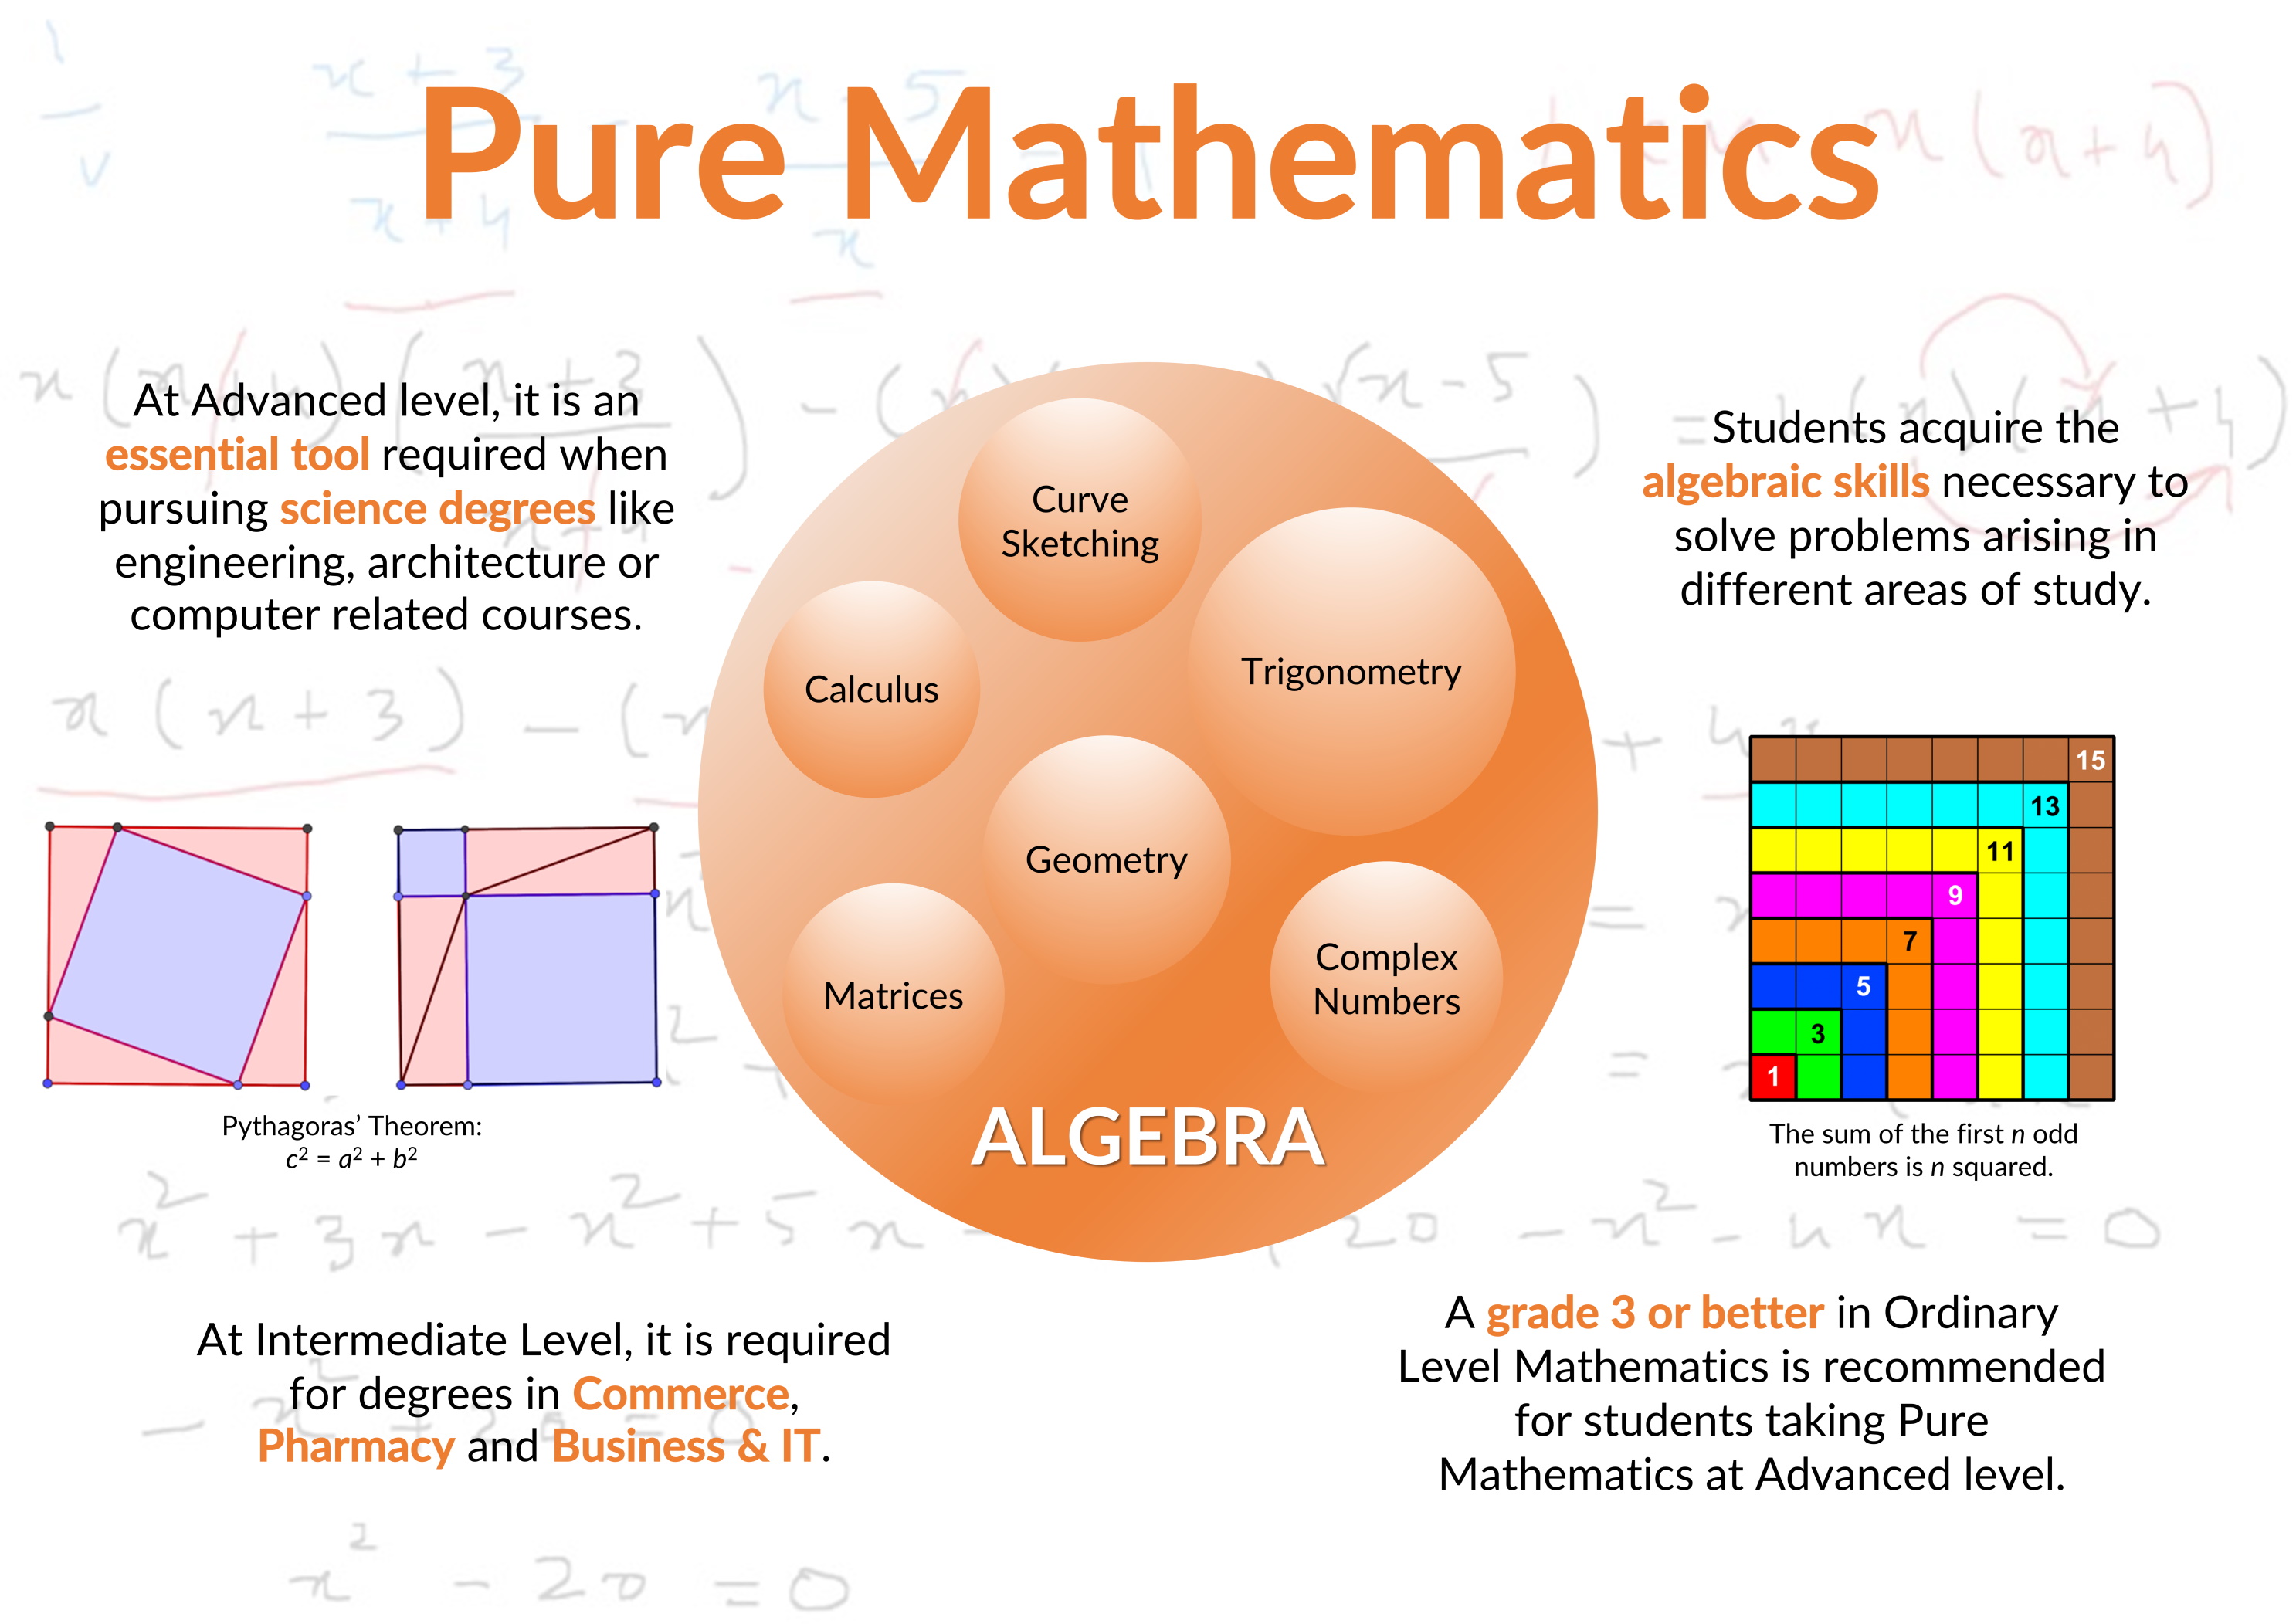 pure mathematics phd programs